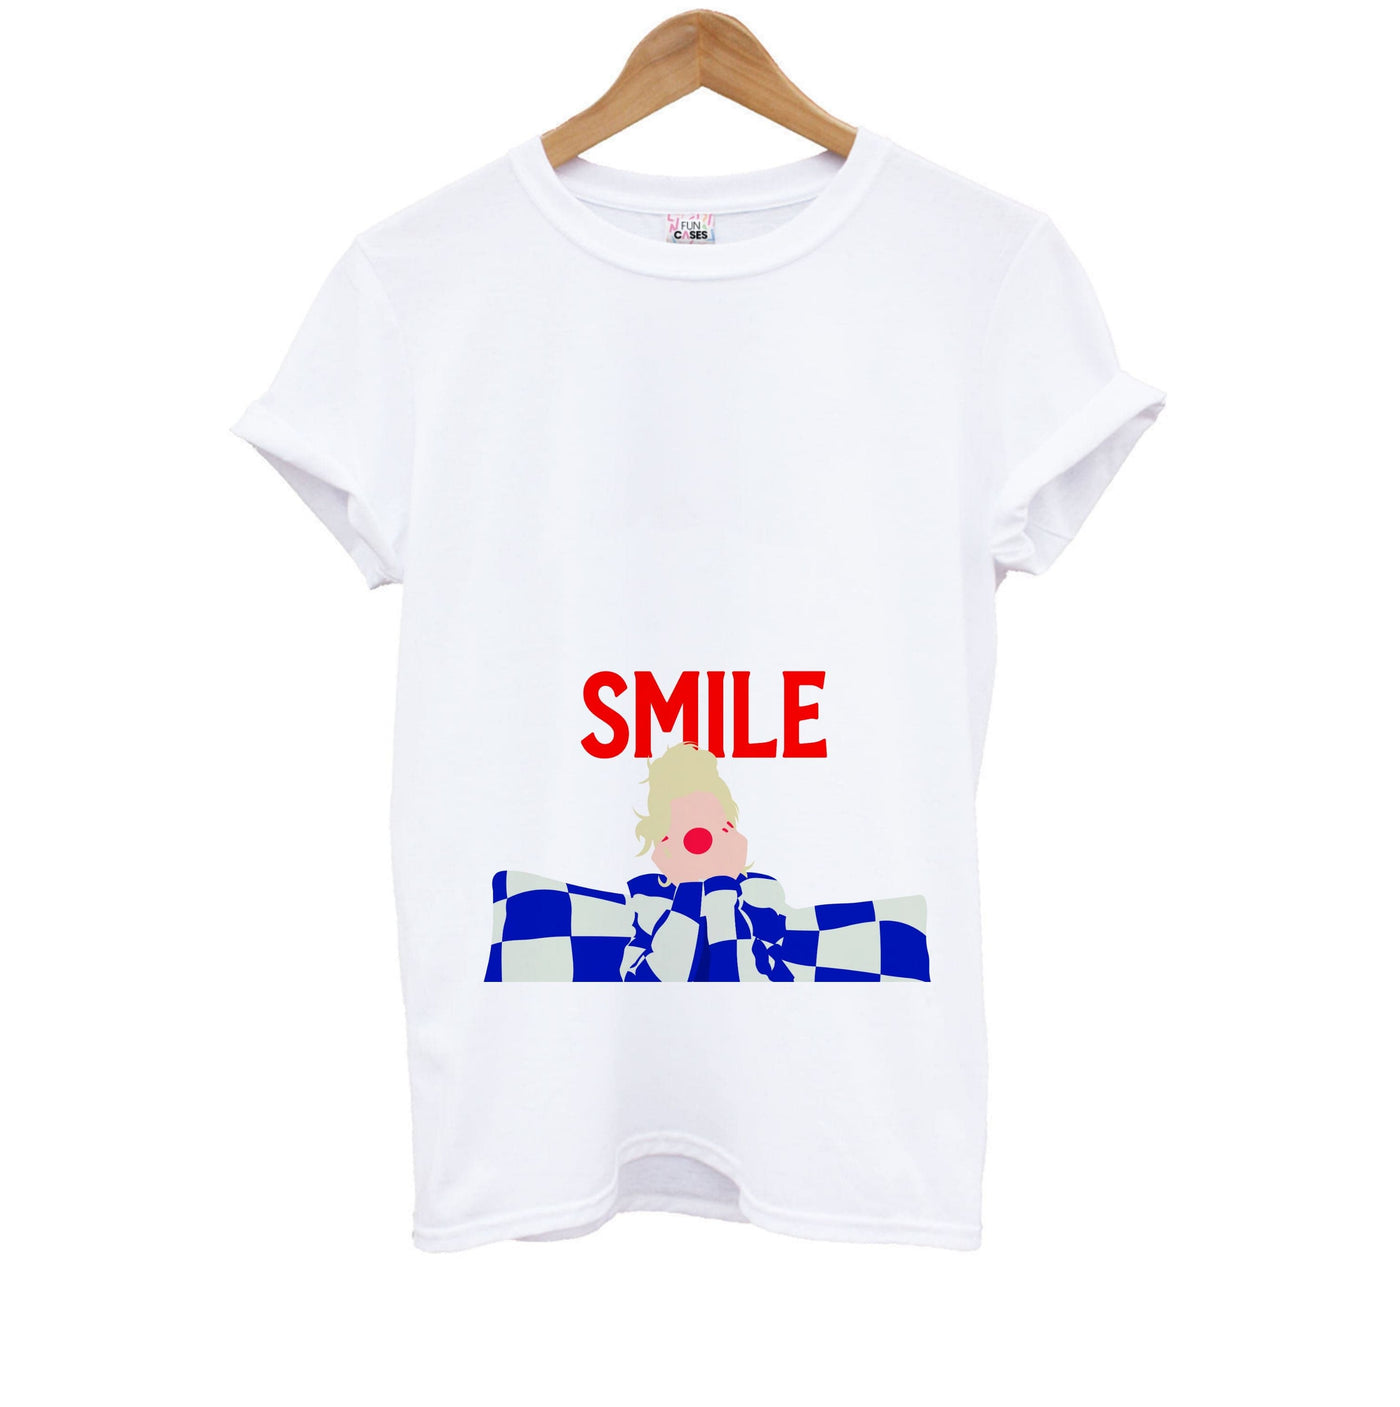 Smile - Katy Perry Kids T-Shirt